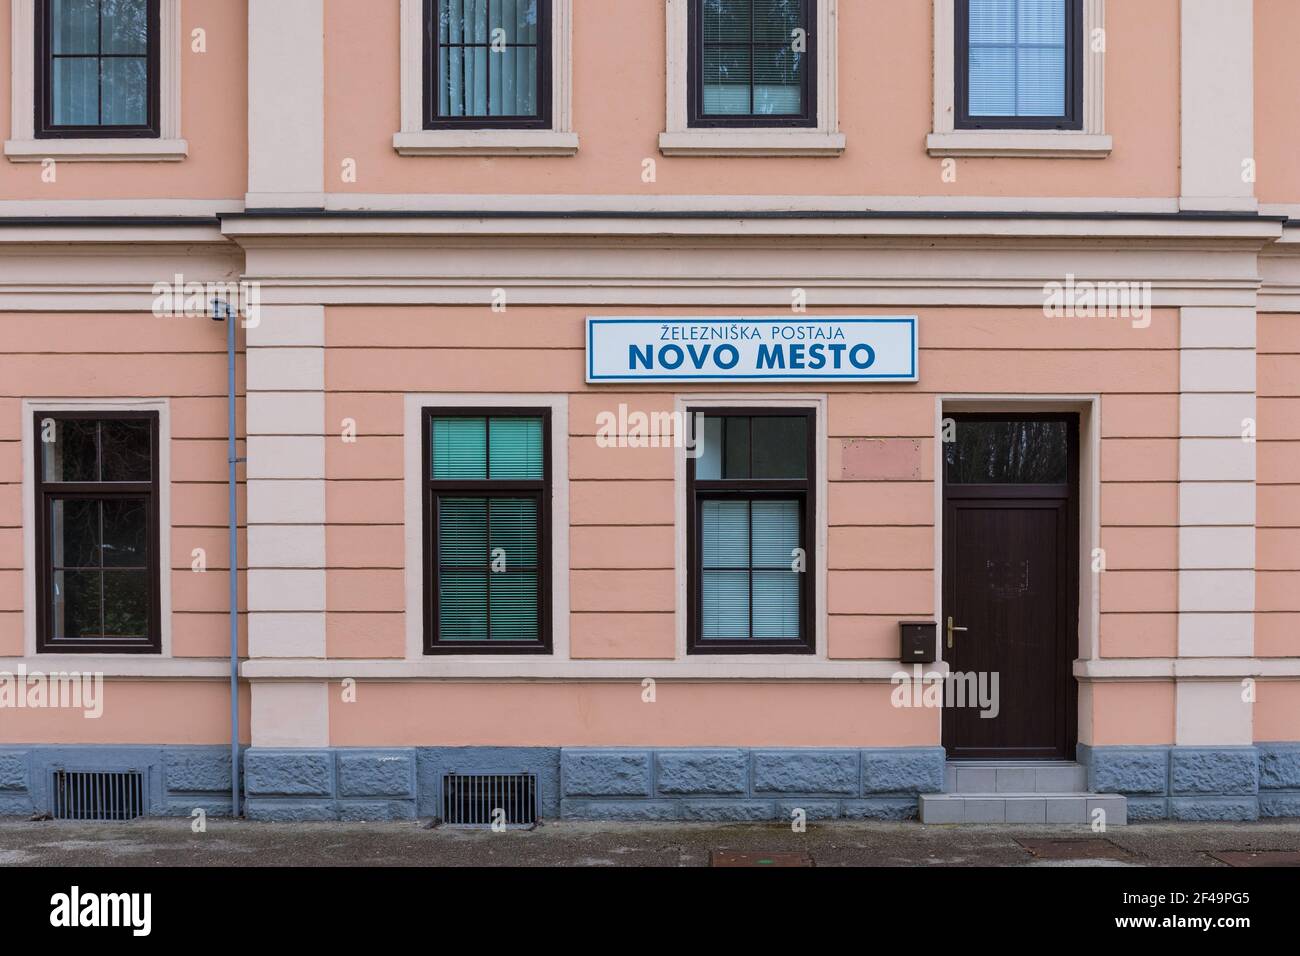 Railway station in Novo mesto, Slovenia Stock Photo